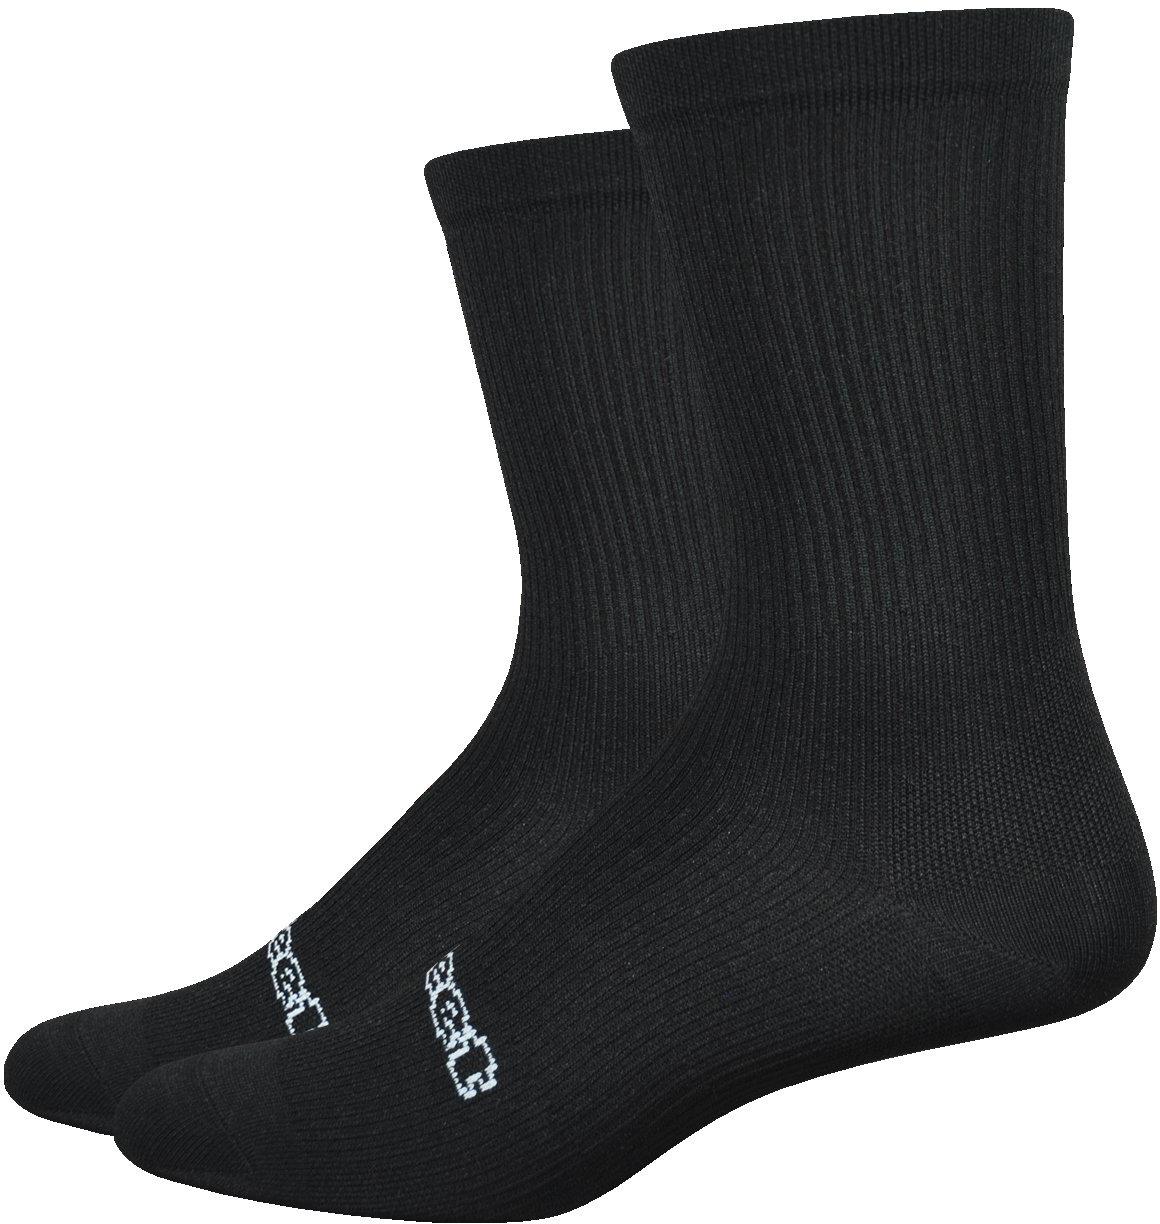 Defeet Evo Classique Socks - Black